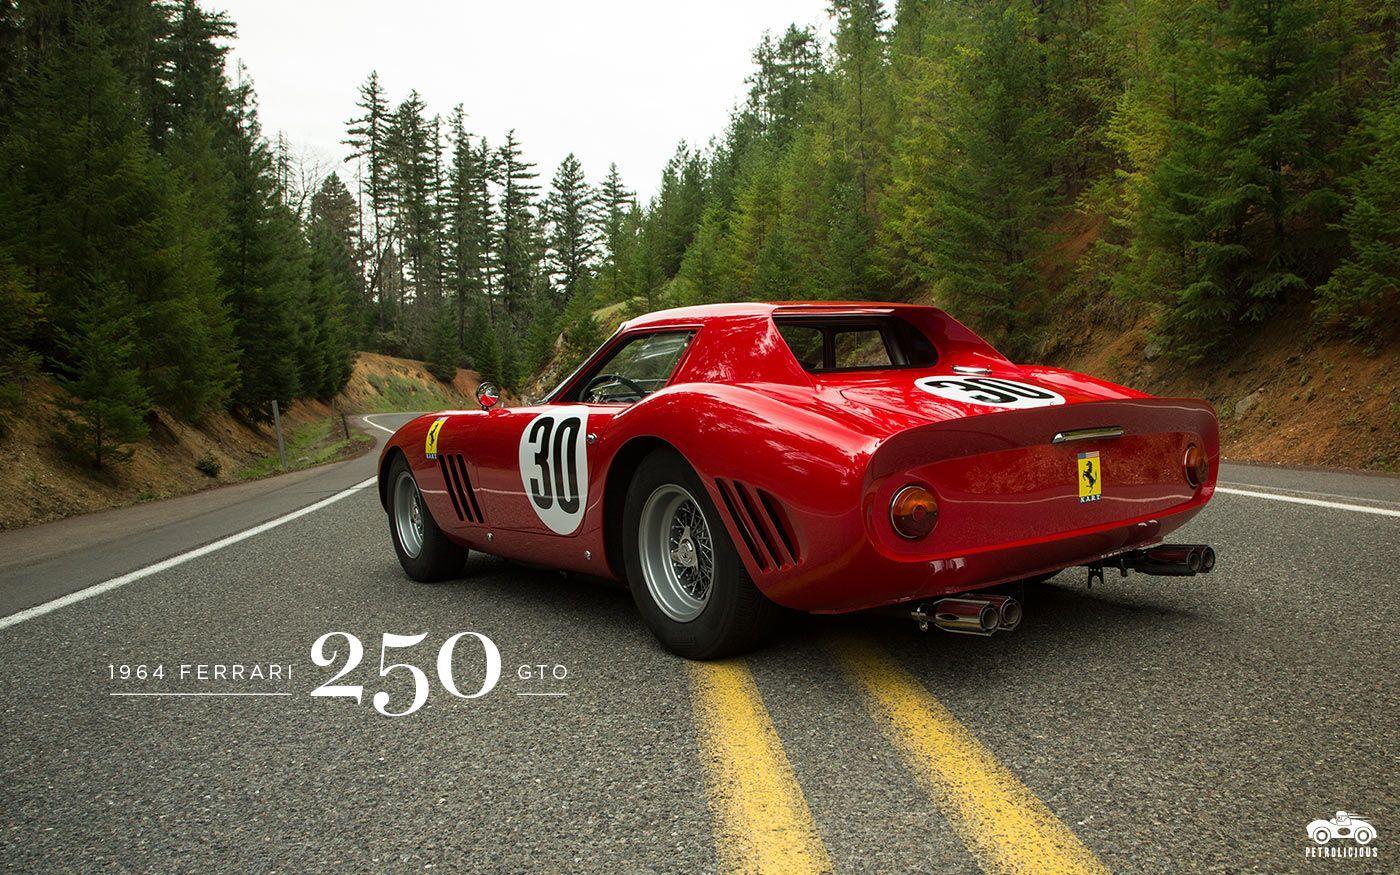 Ferrari 250 GTO Wallpaper. Ferrari, Cars and Motor vehicle